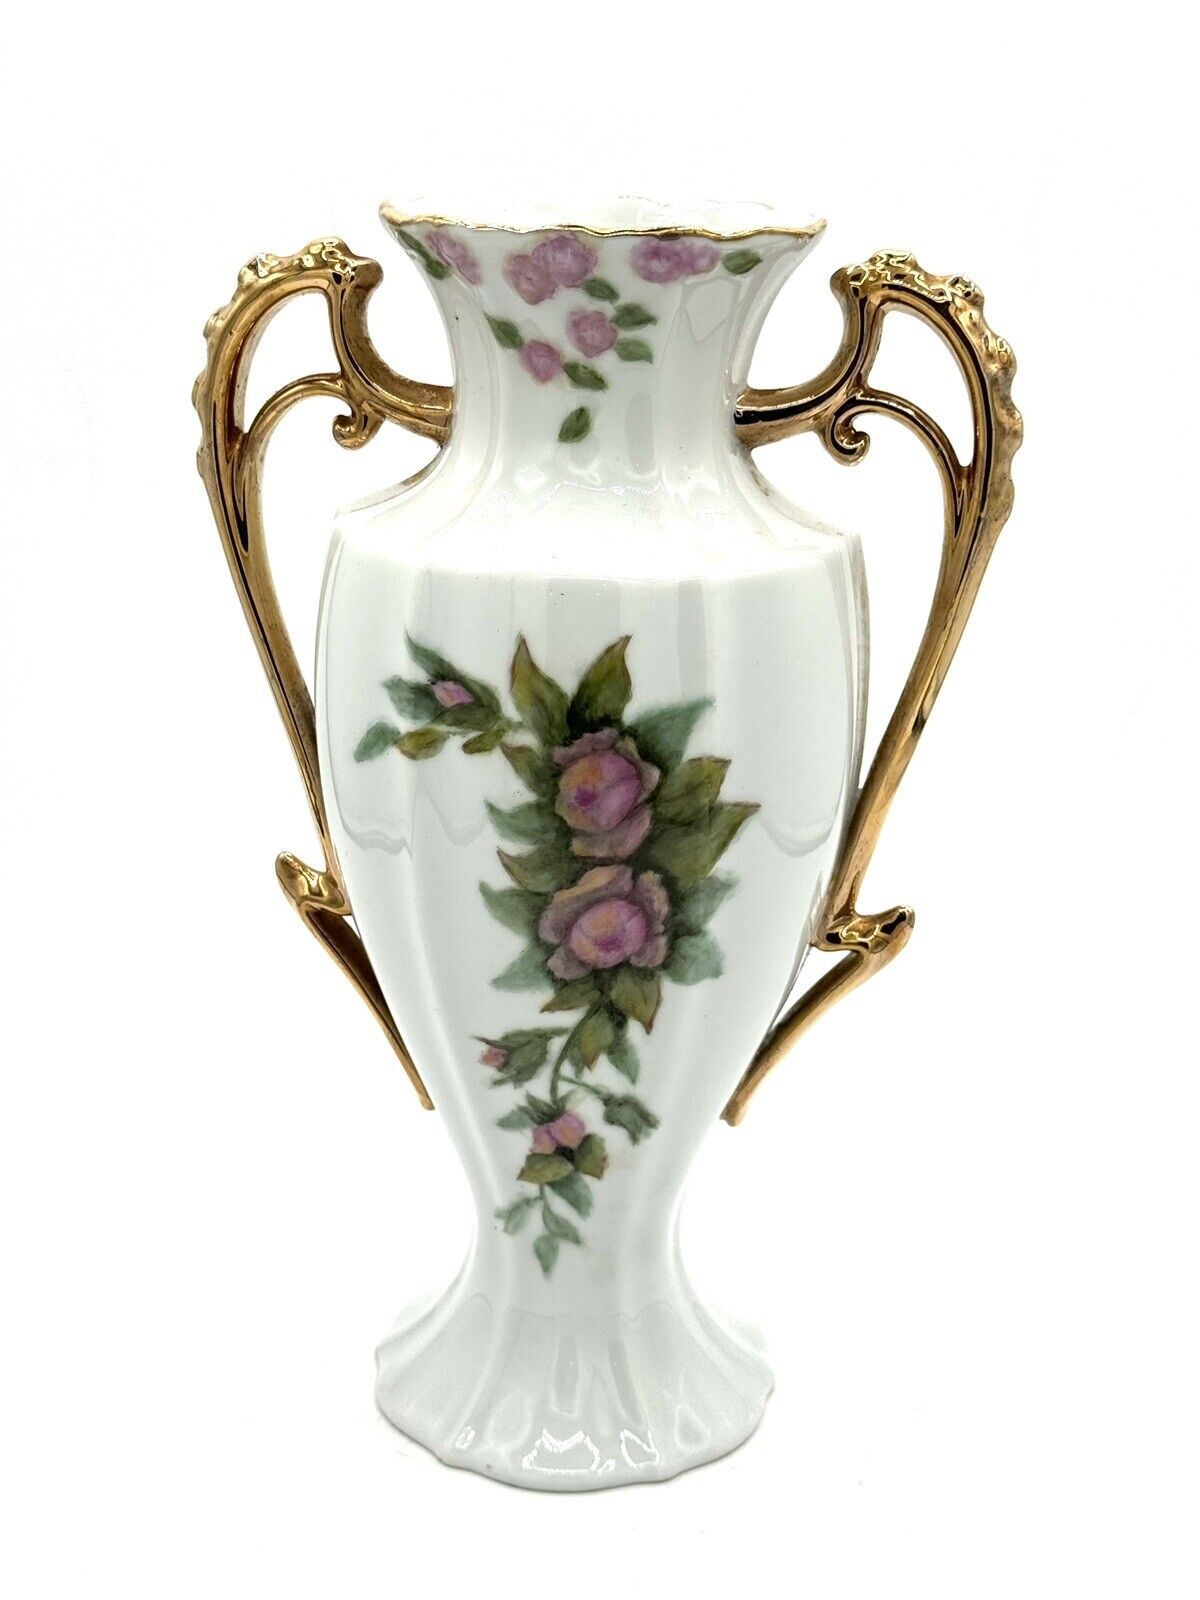 Vintage Floral Vase With Decorative Handles By m. Hart, 10”